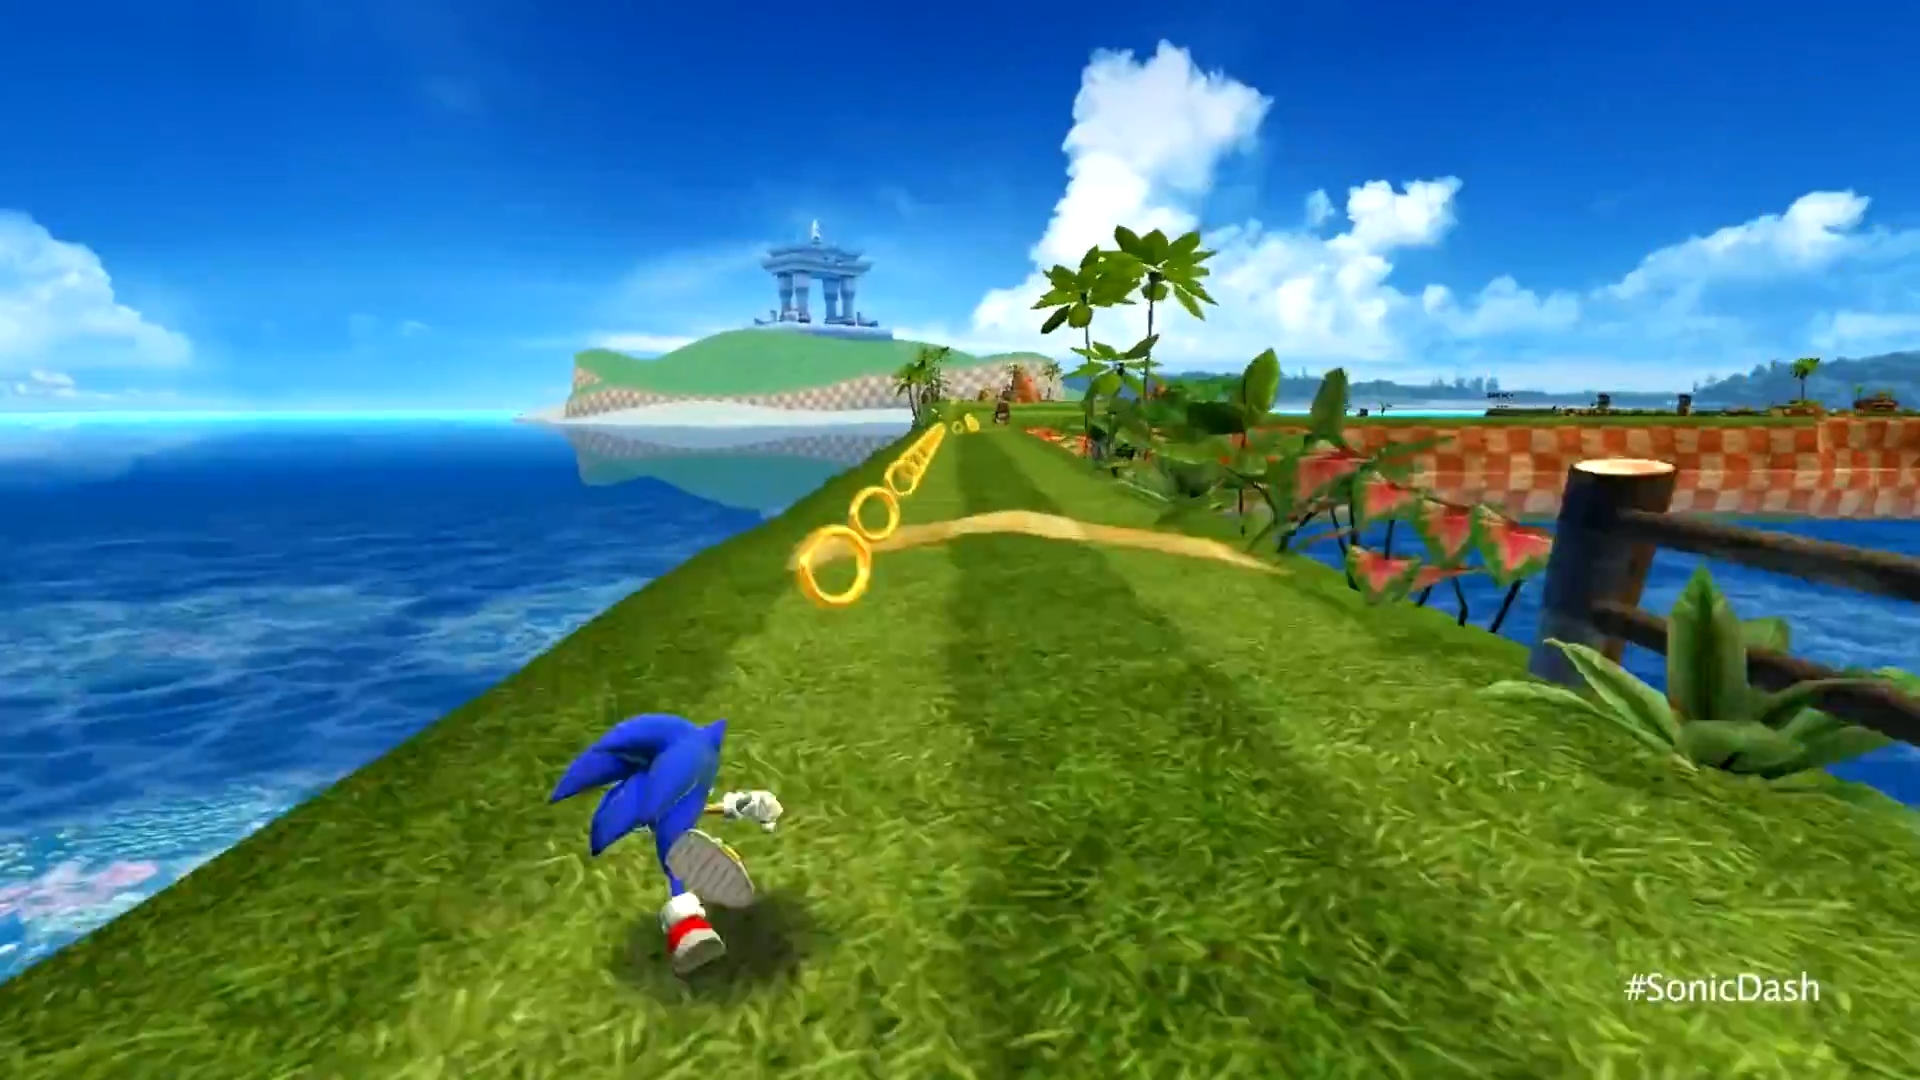 Addictive games - Sonic Dash. A screenshot shows Sonic running on grass.